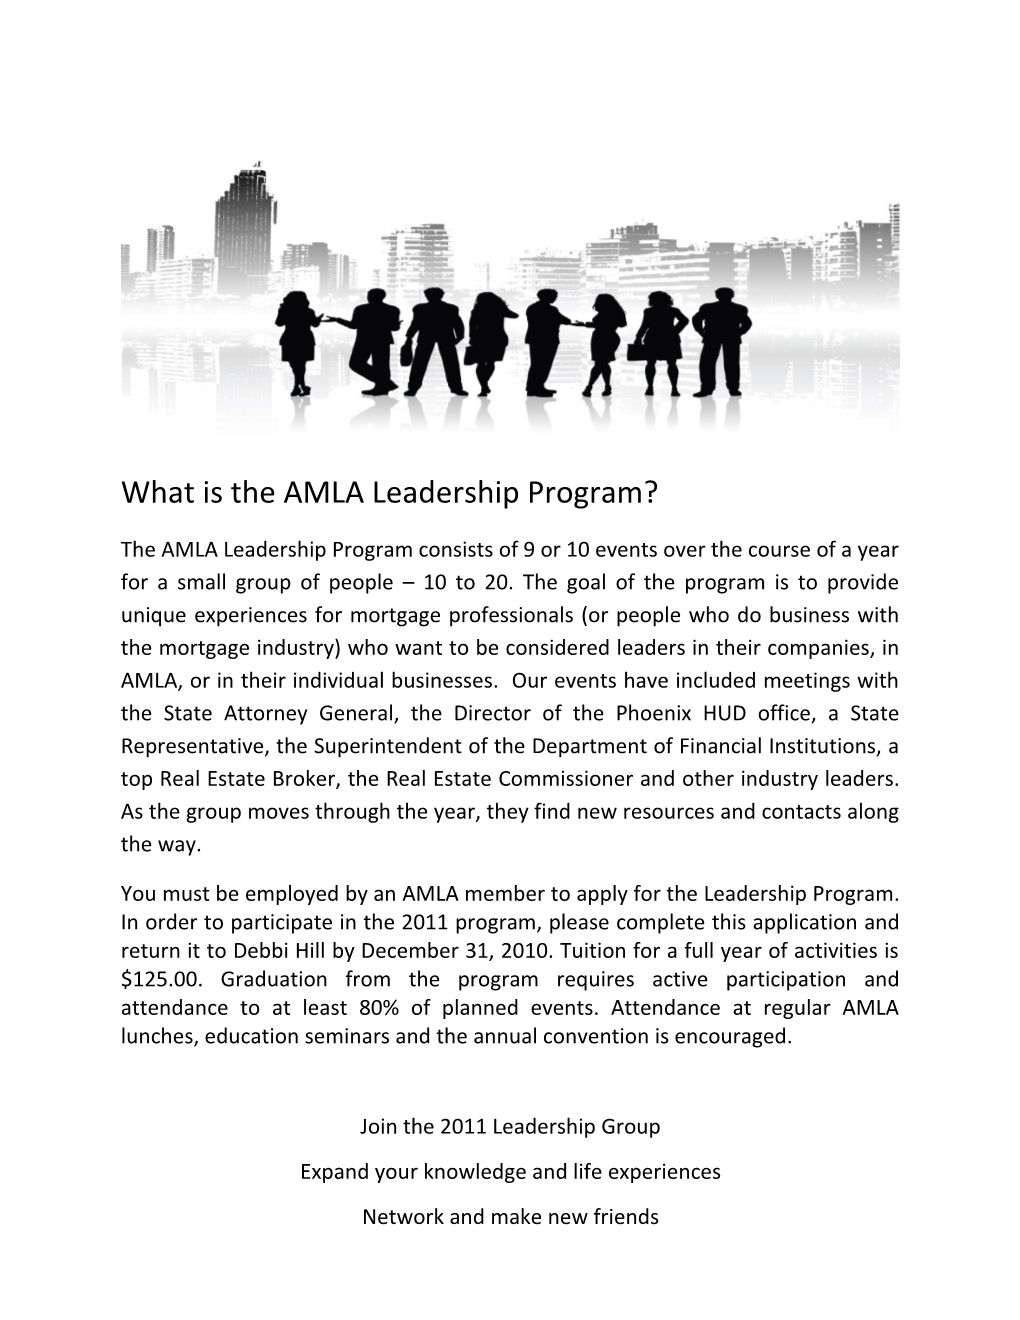 What Is the AMLA Leadership Program?